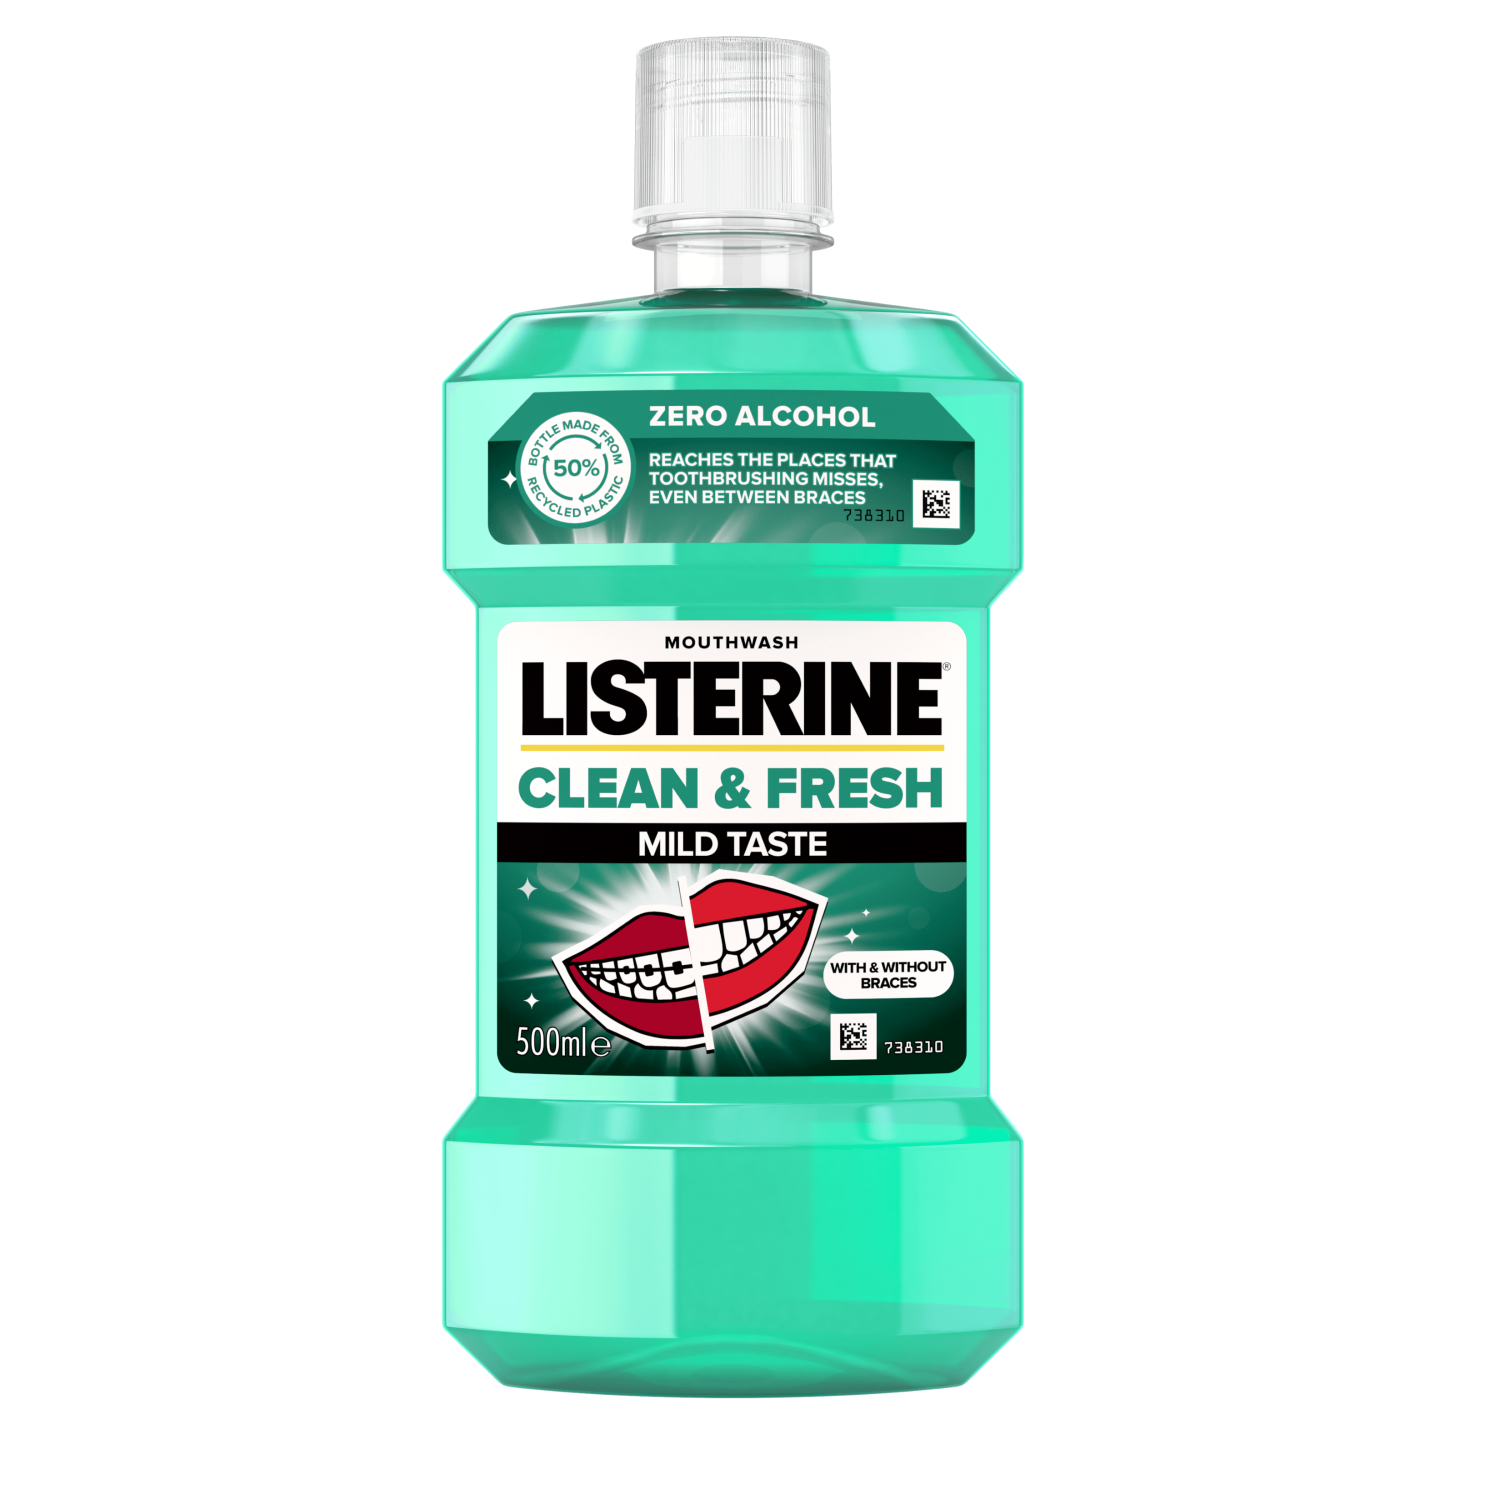 Listerine Clean & Fresh Mild Taste 500 ml termékfotó, reaches the places that toothbrushing misses, even between braces és with & without braces feliratokkal